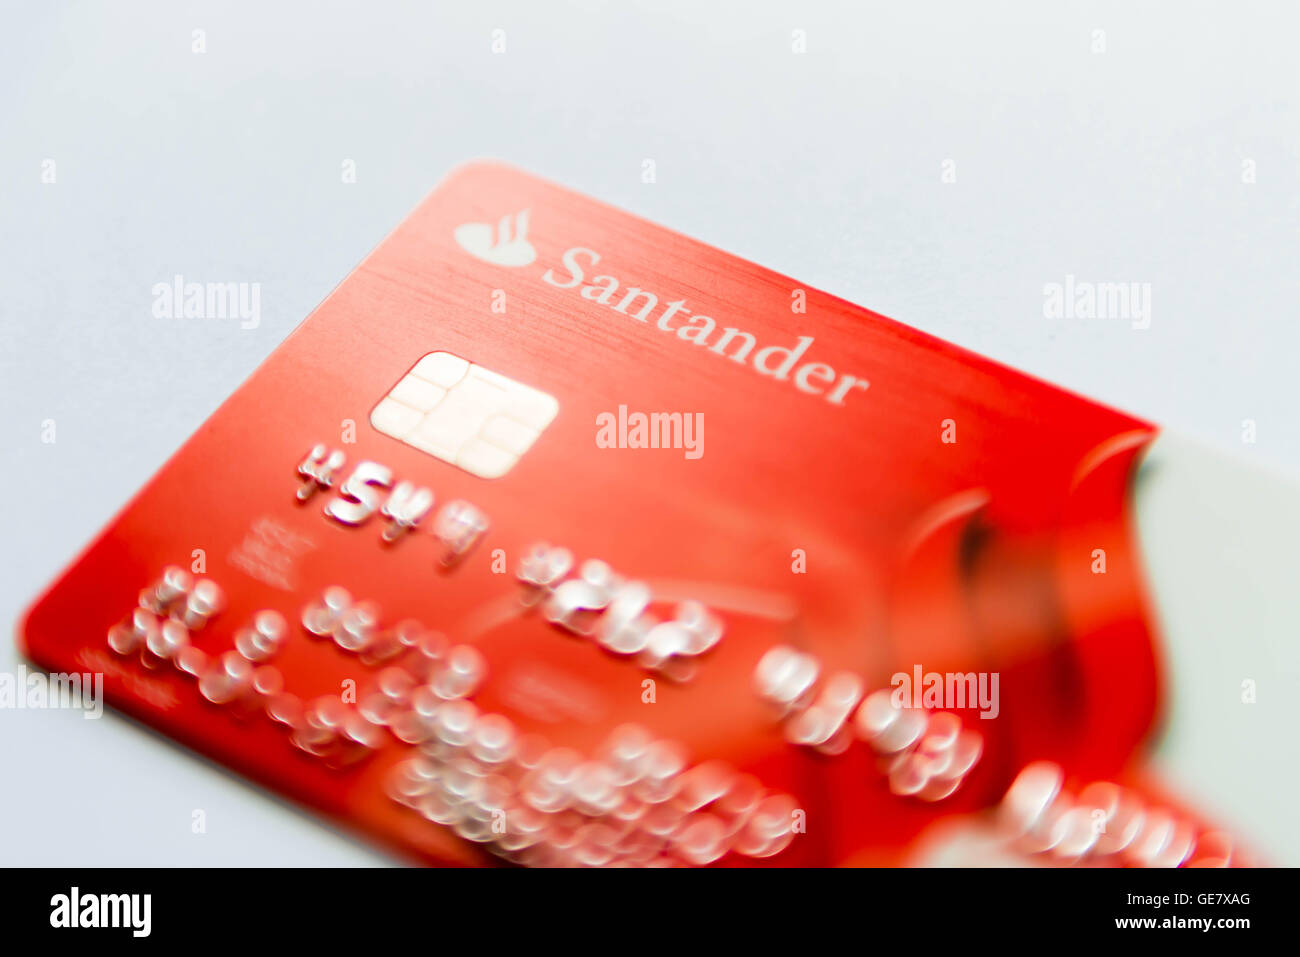 Santander bank card detail Stock Photo - Alamy